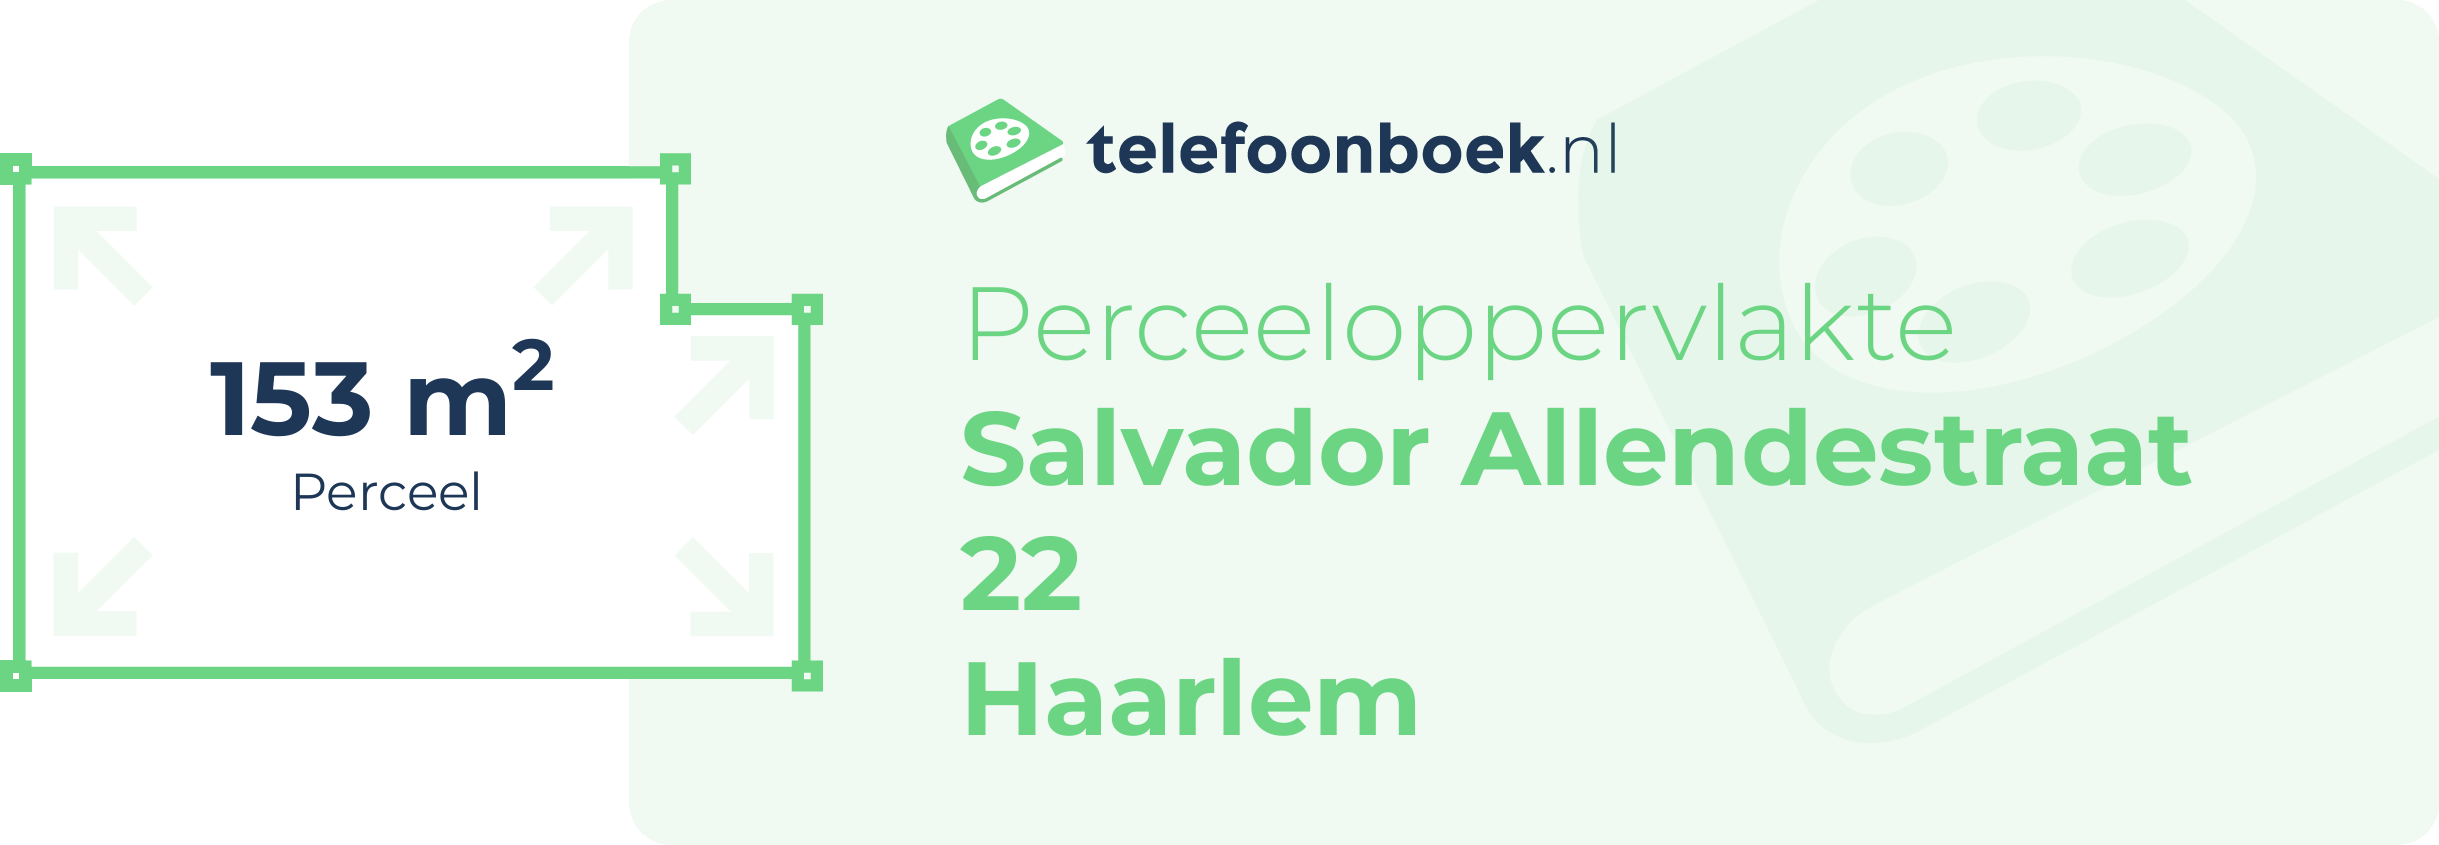 Perceeloppervlakte Salvador Allendestraat 22 Haarlem